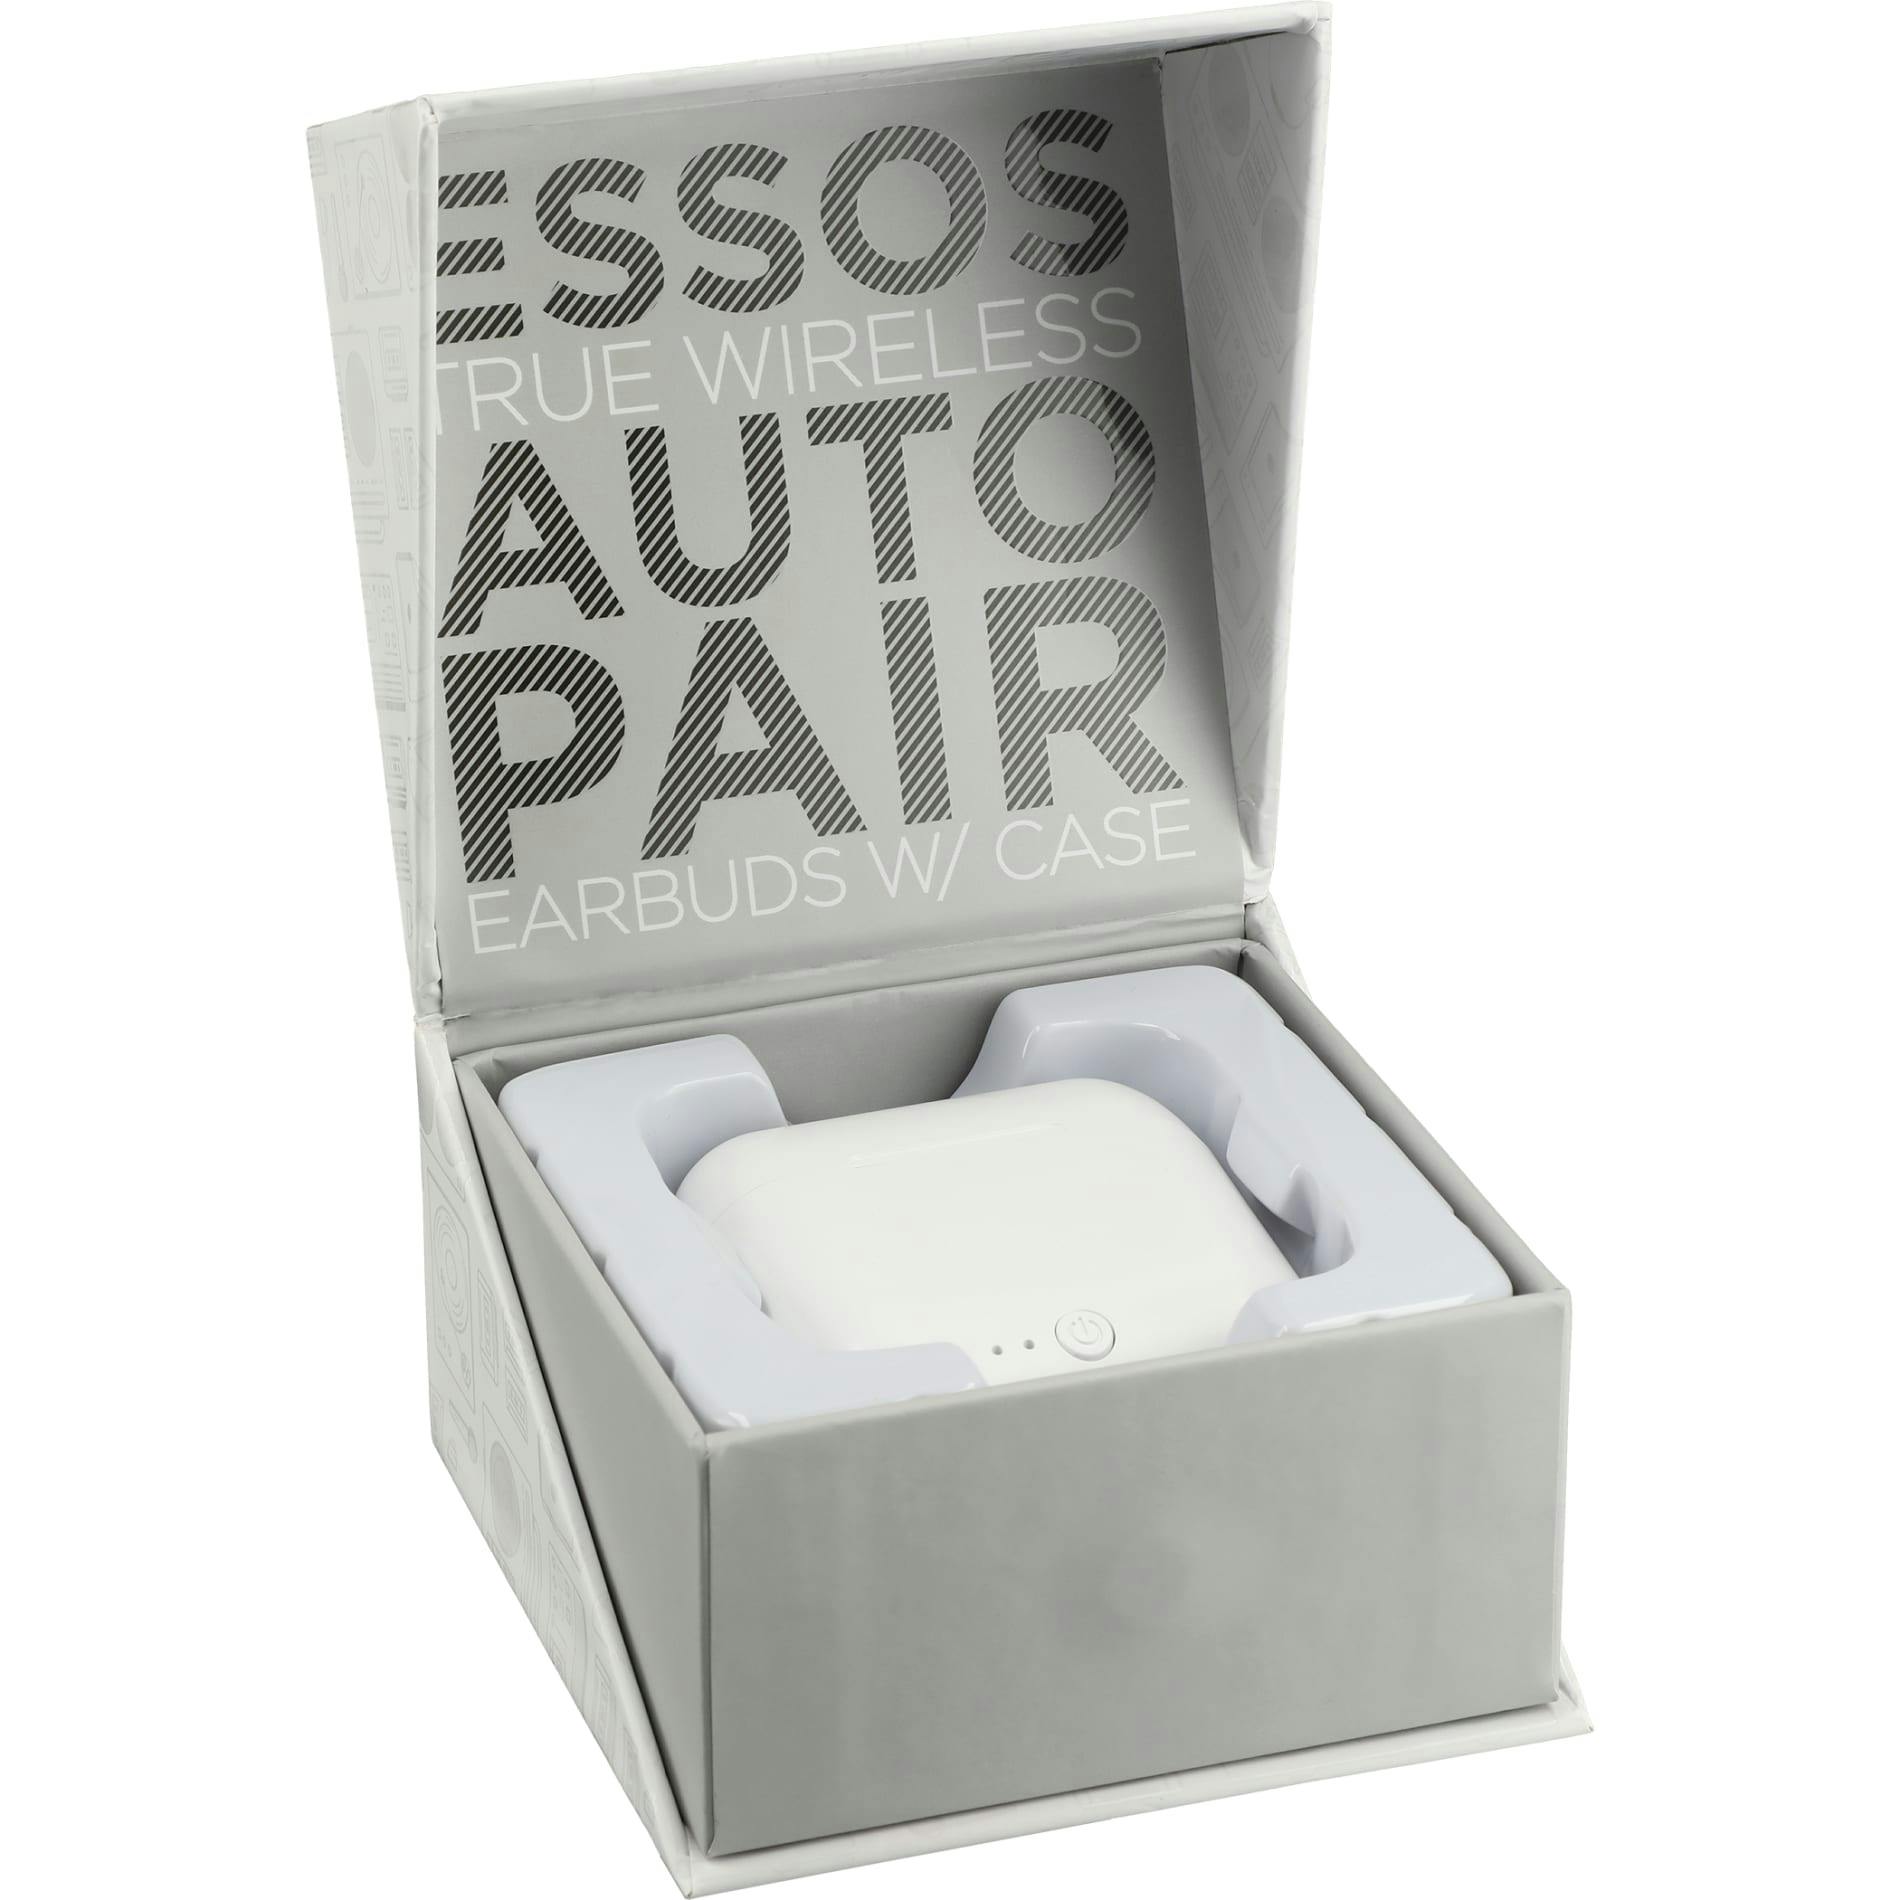 Essos True Wireless Auto Pair Earbuds w/Case - additional Image 4